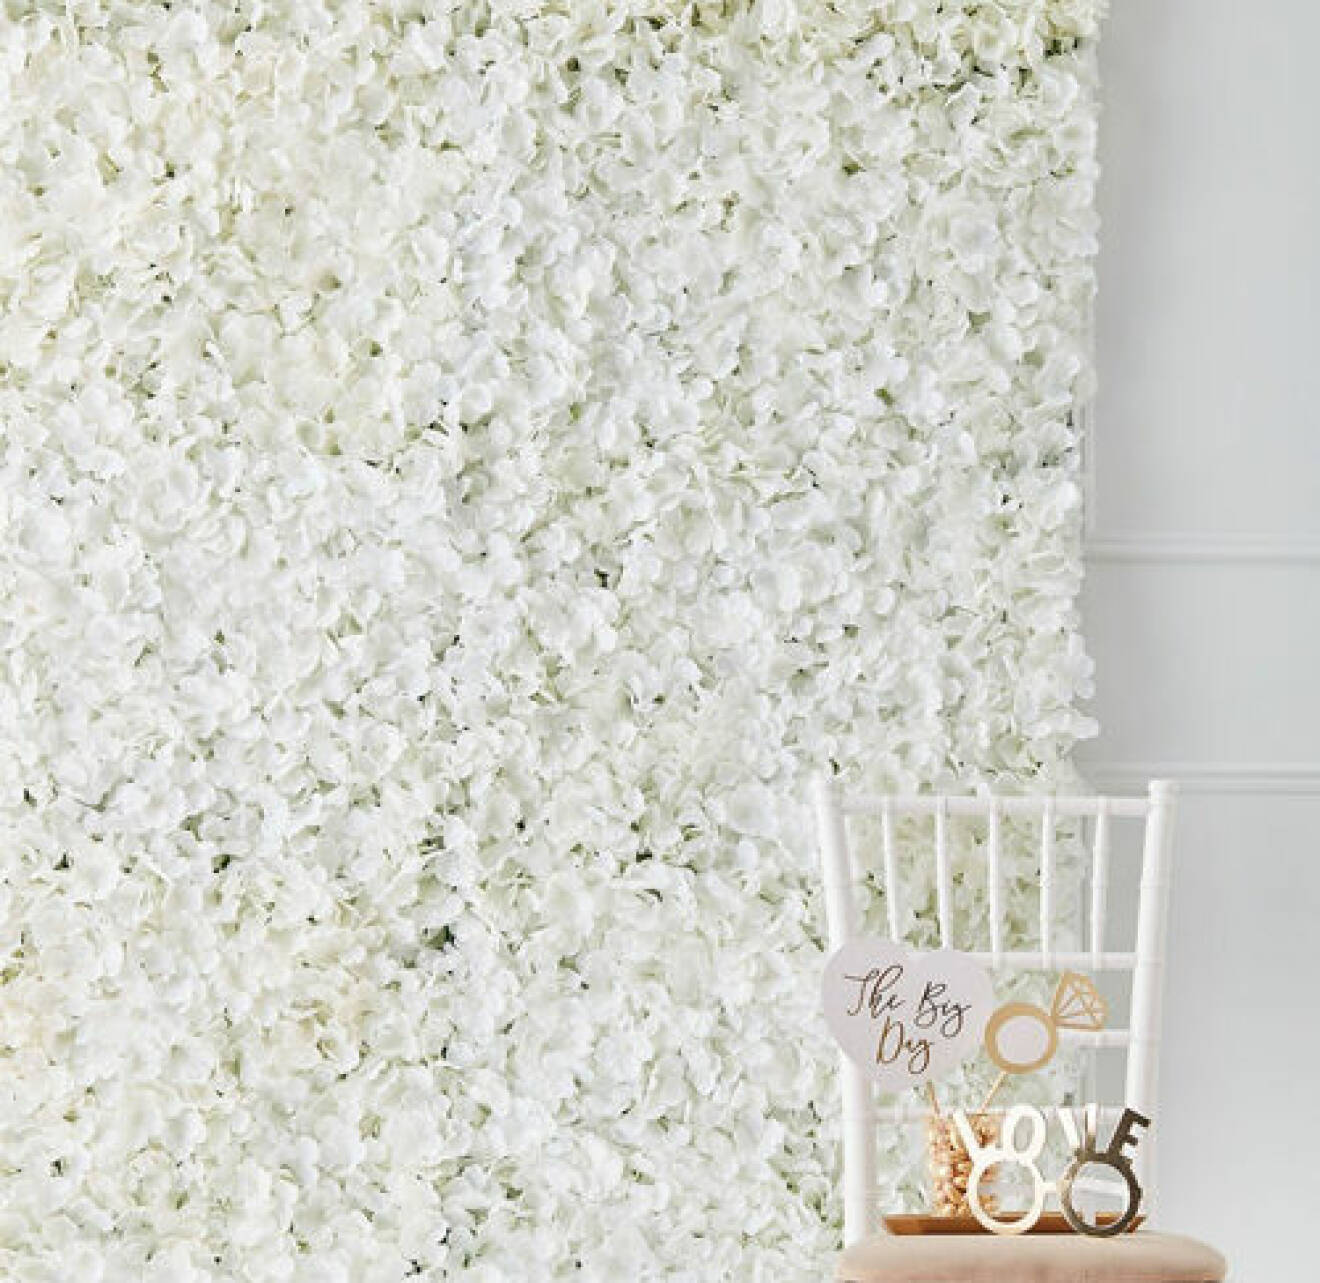 blomstervägg med vita blommor